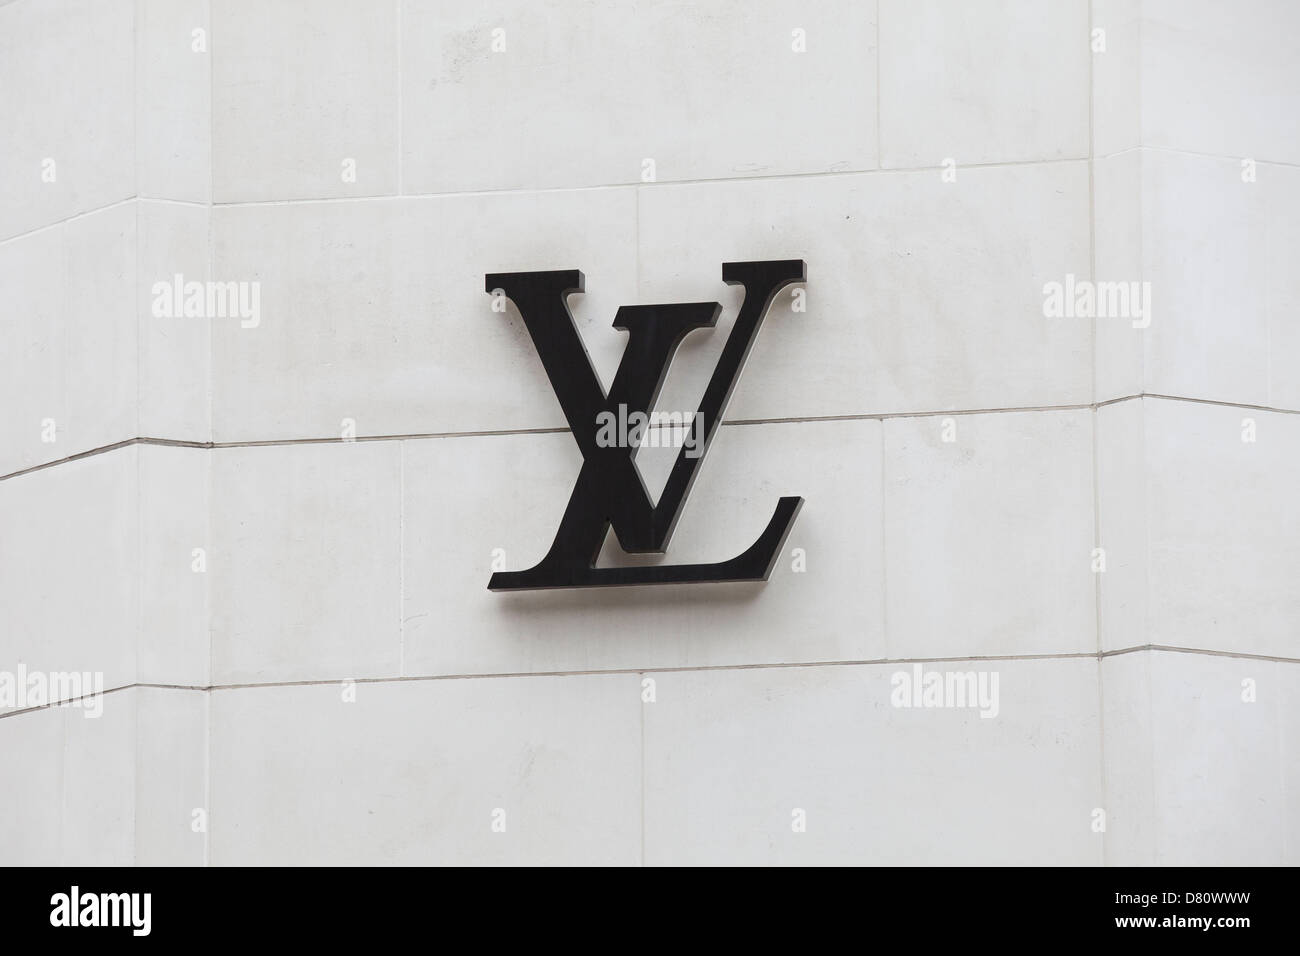 Stock Symbol For Louis Vuitton